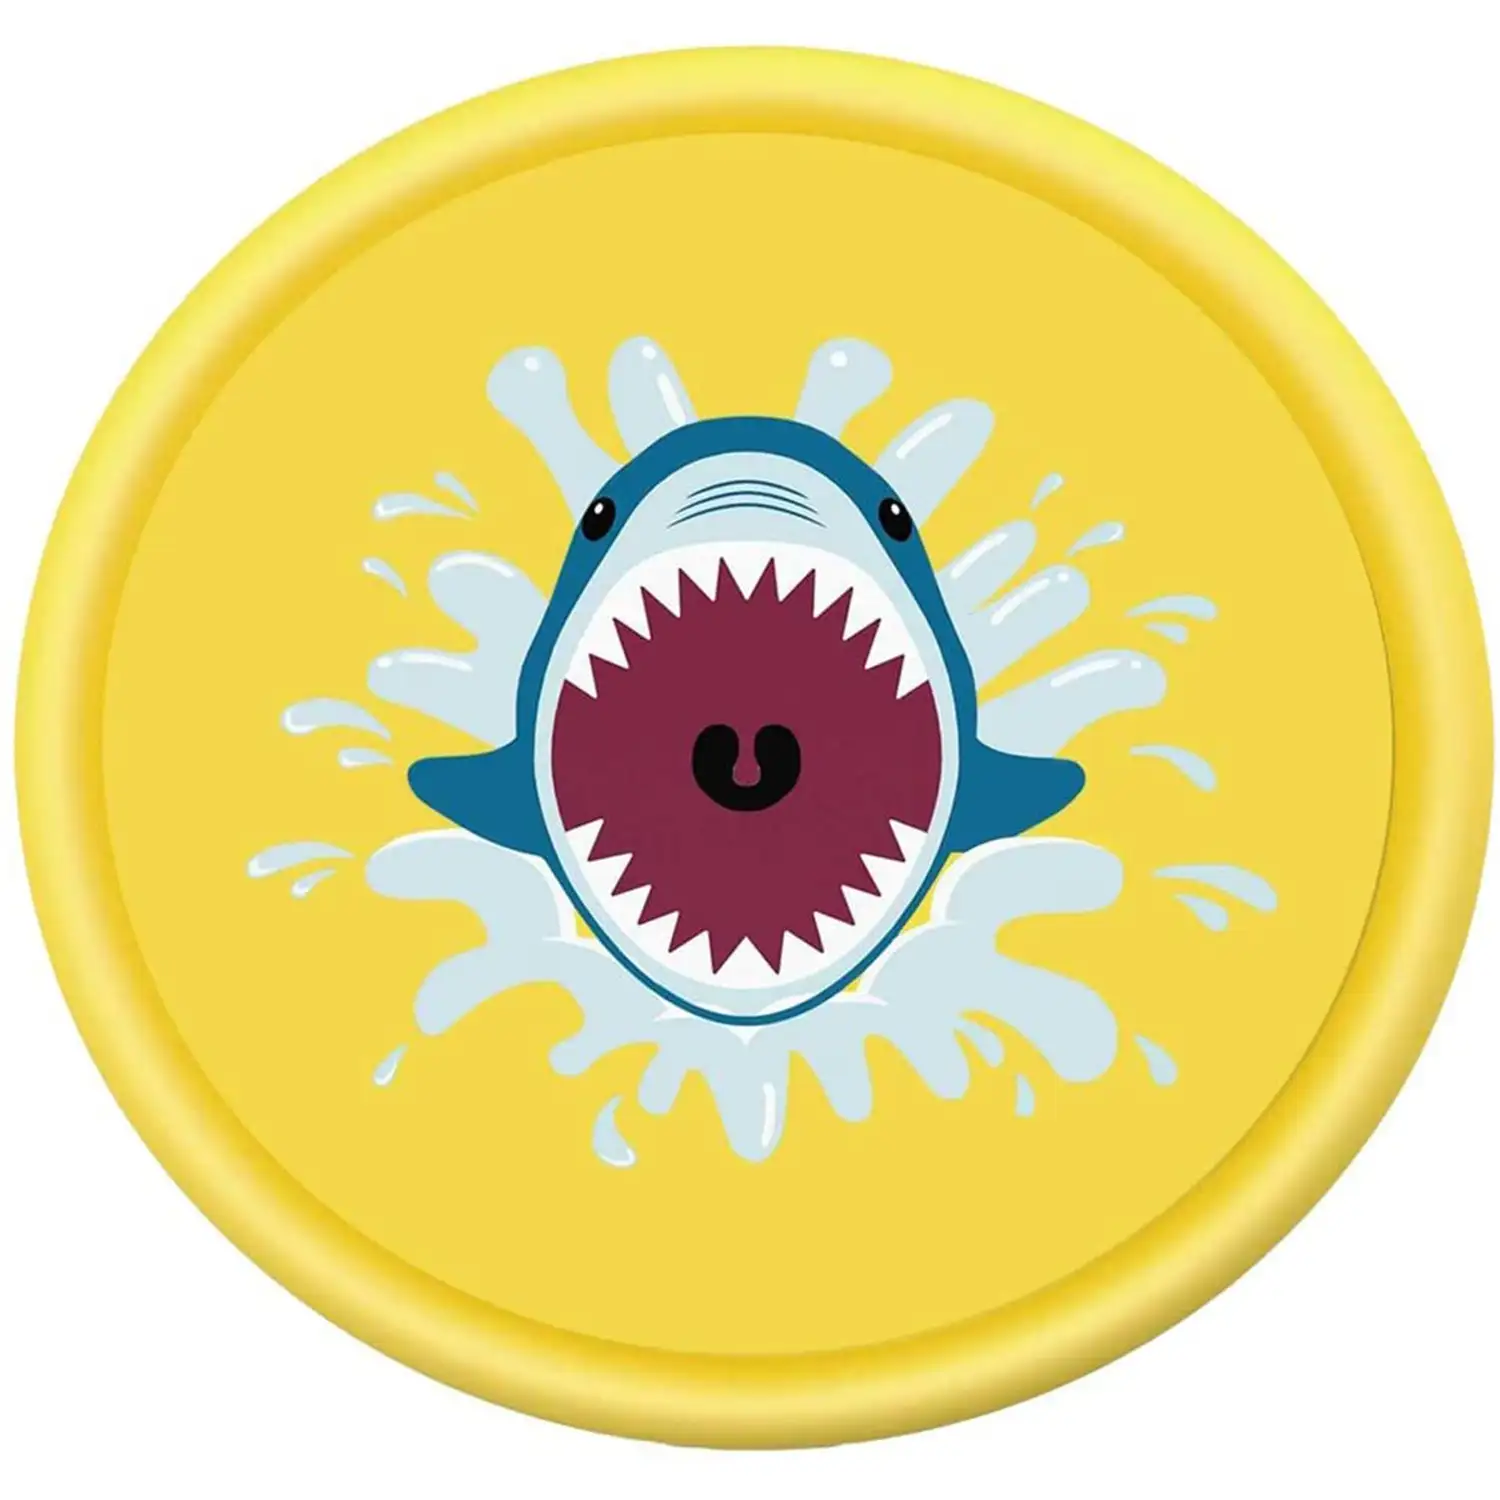 Splash Pad. Juguete inflable con aspersor de agua para jugar. 170cm de diámetro. Diseño tiburón.